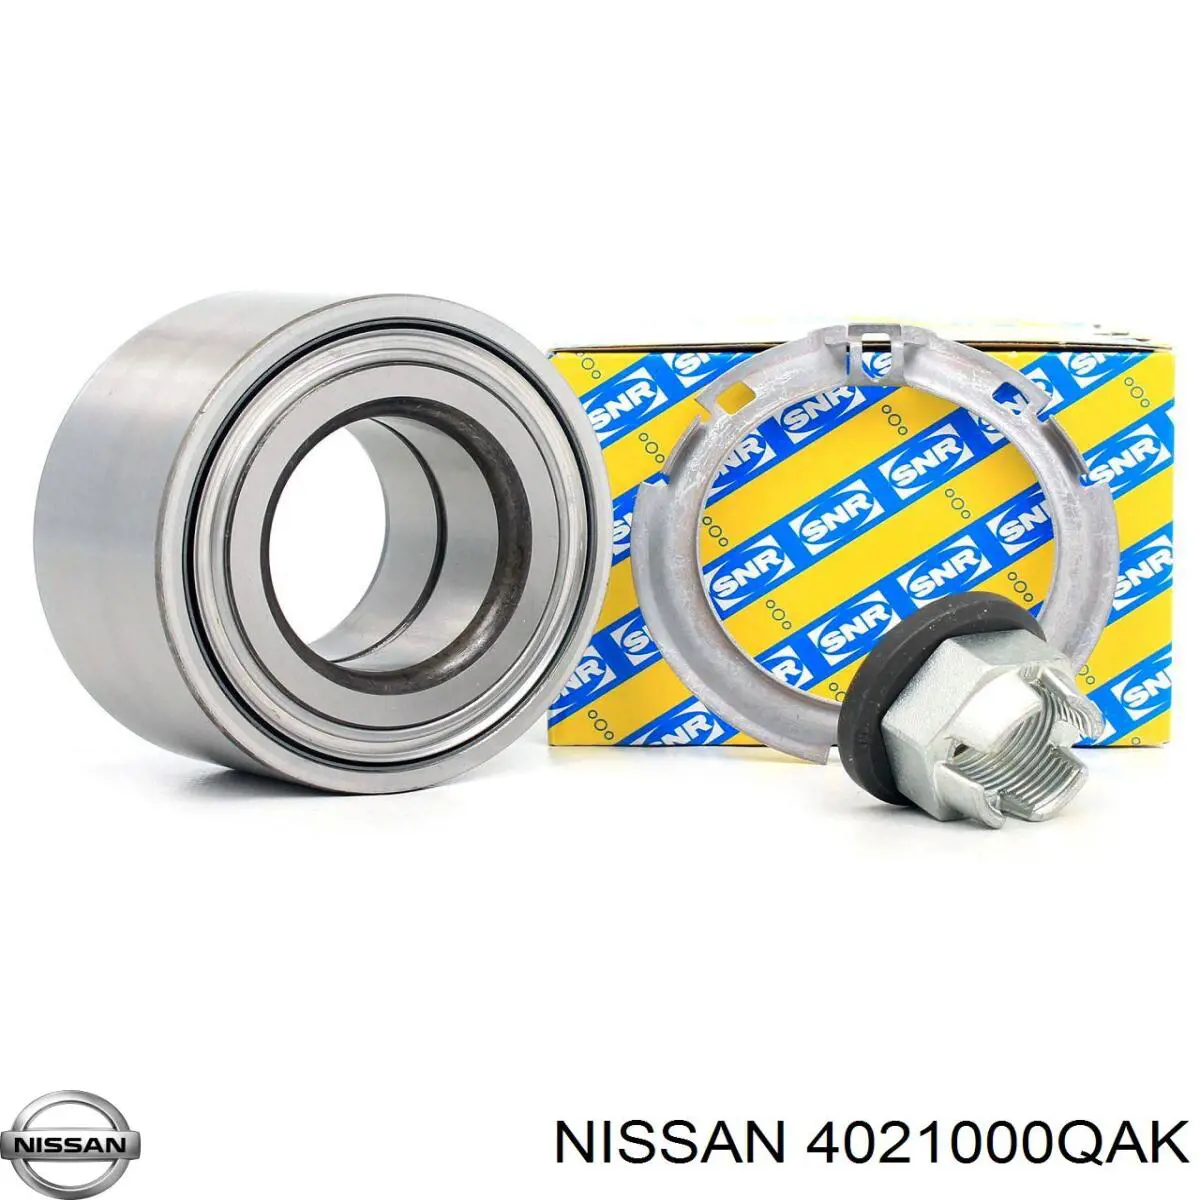 4021000QAK Nissan cojinete de rueda delantero